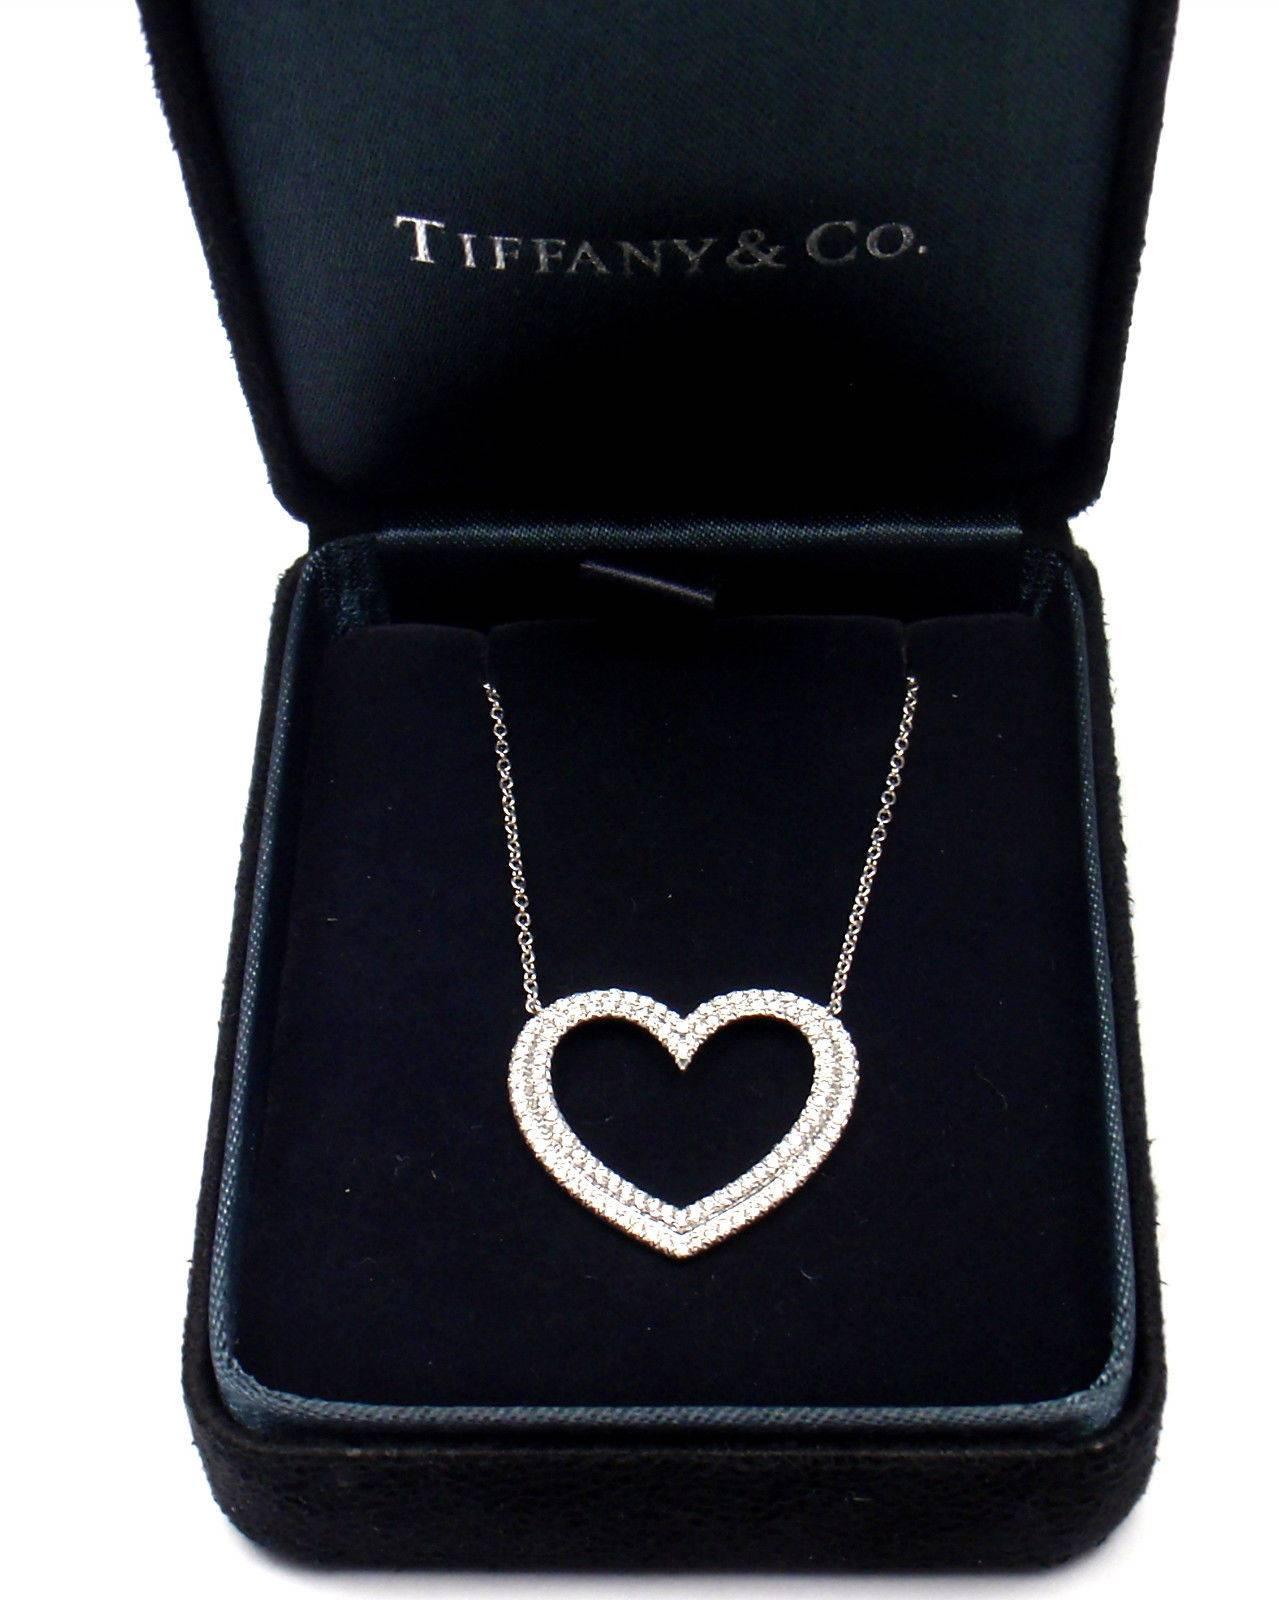 Women's or Men's Tiffany & Co. Metro Large Heart White Gold Pendant Necklace